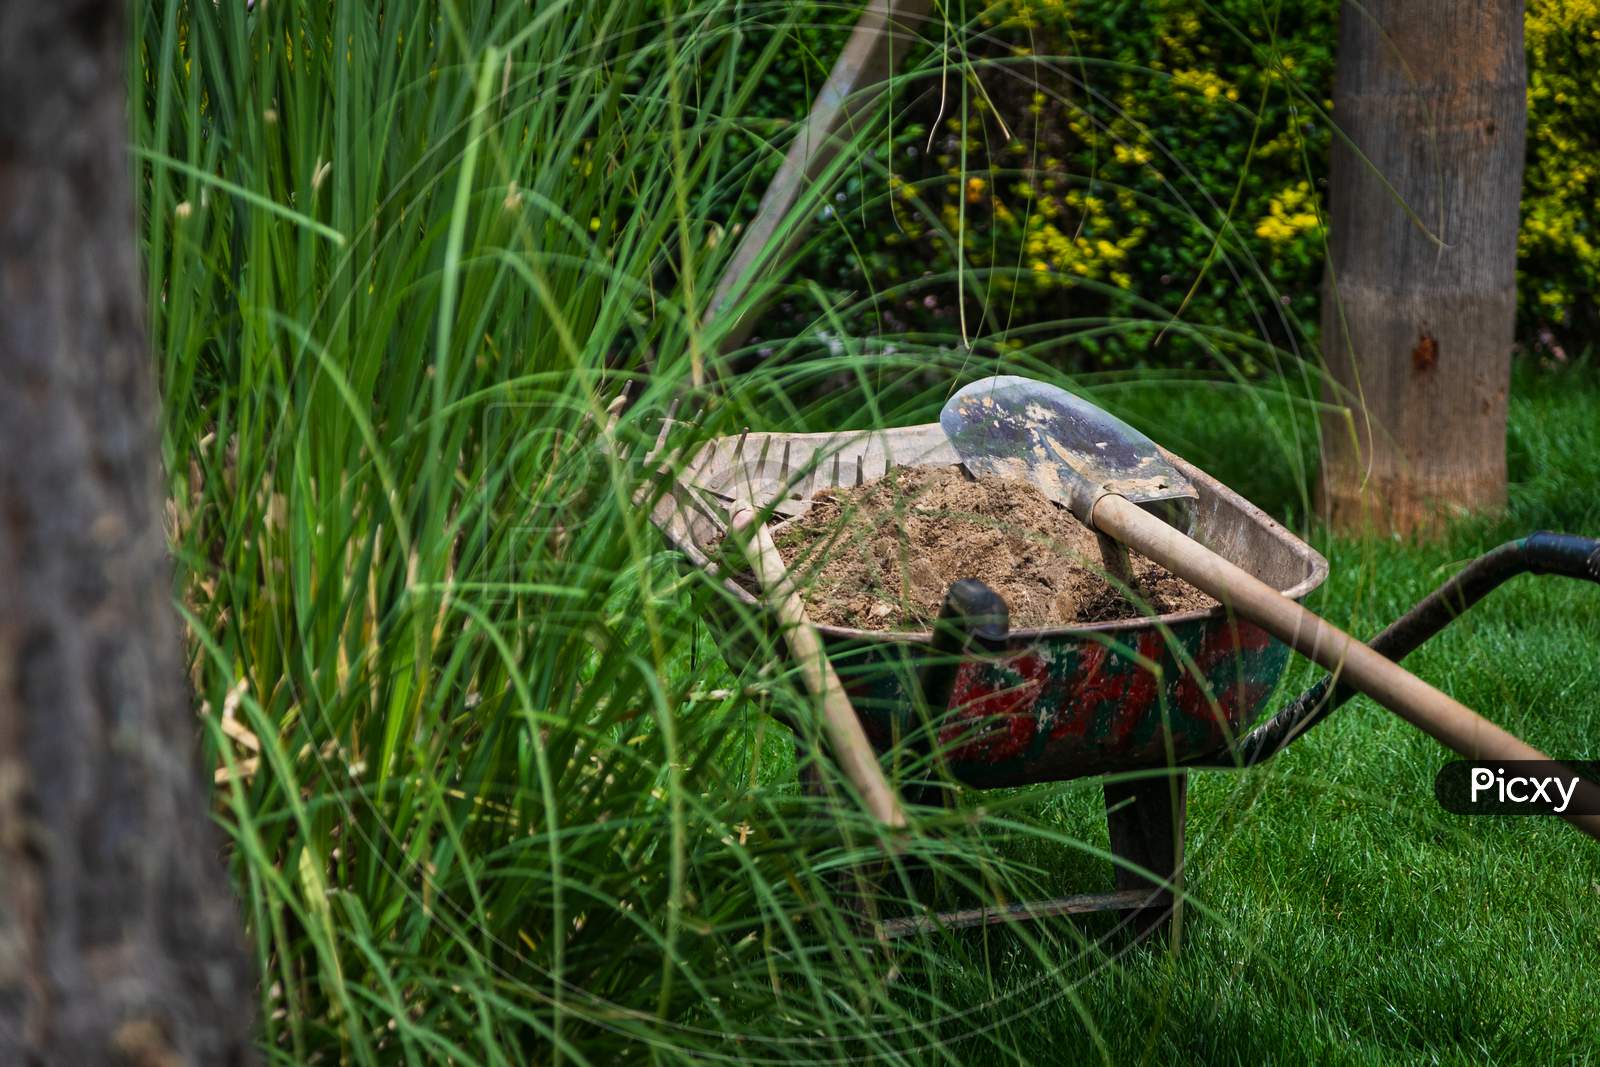 A Shovel, Rake And Sand Lie In A Wheelbarrow In A Blooming Green Garden And Garden In The Backyard. Summer Work Tool